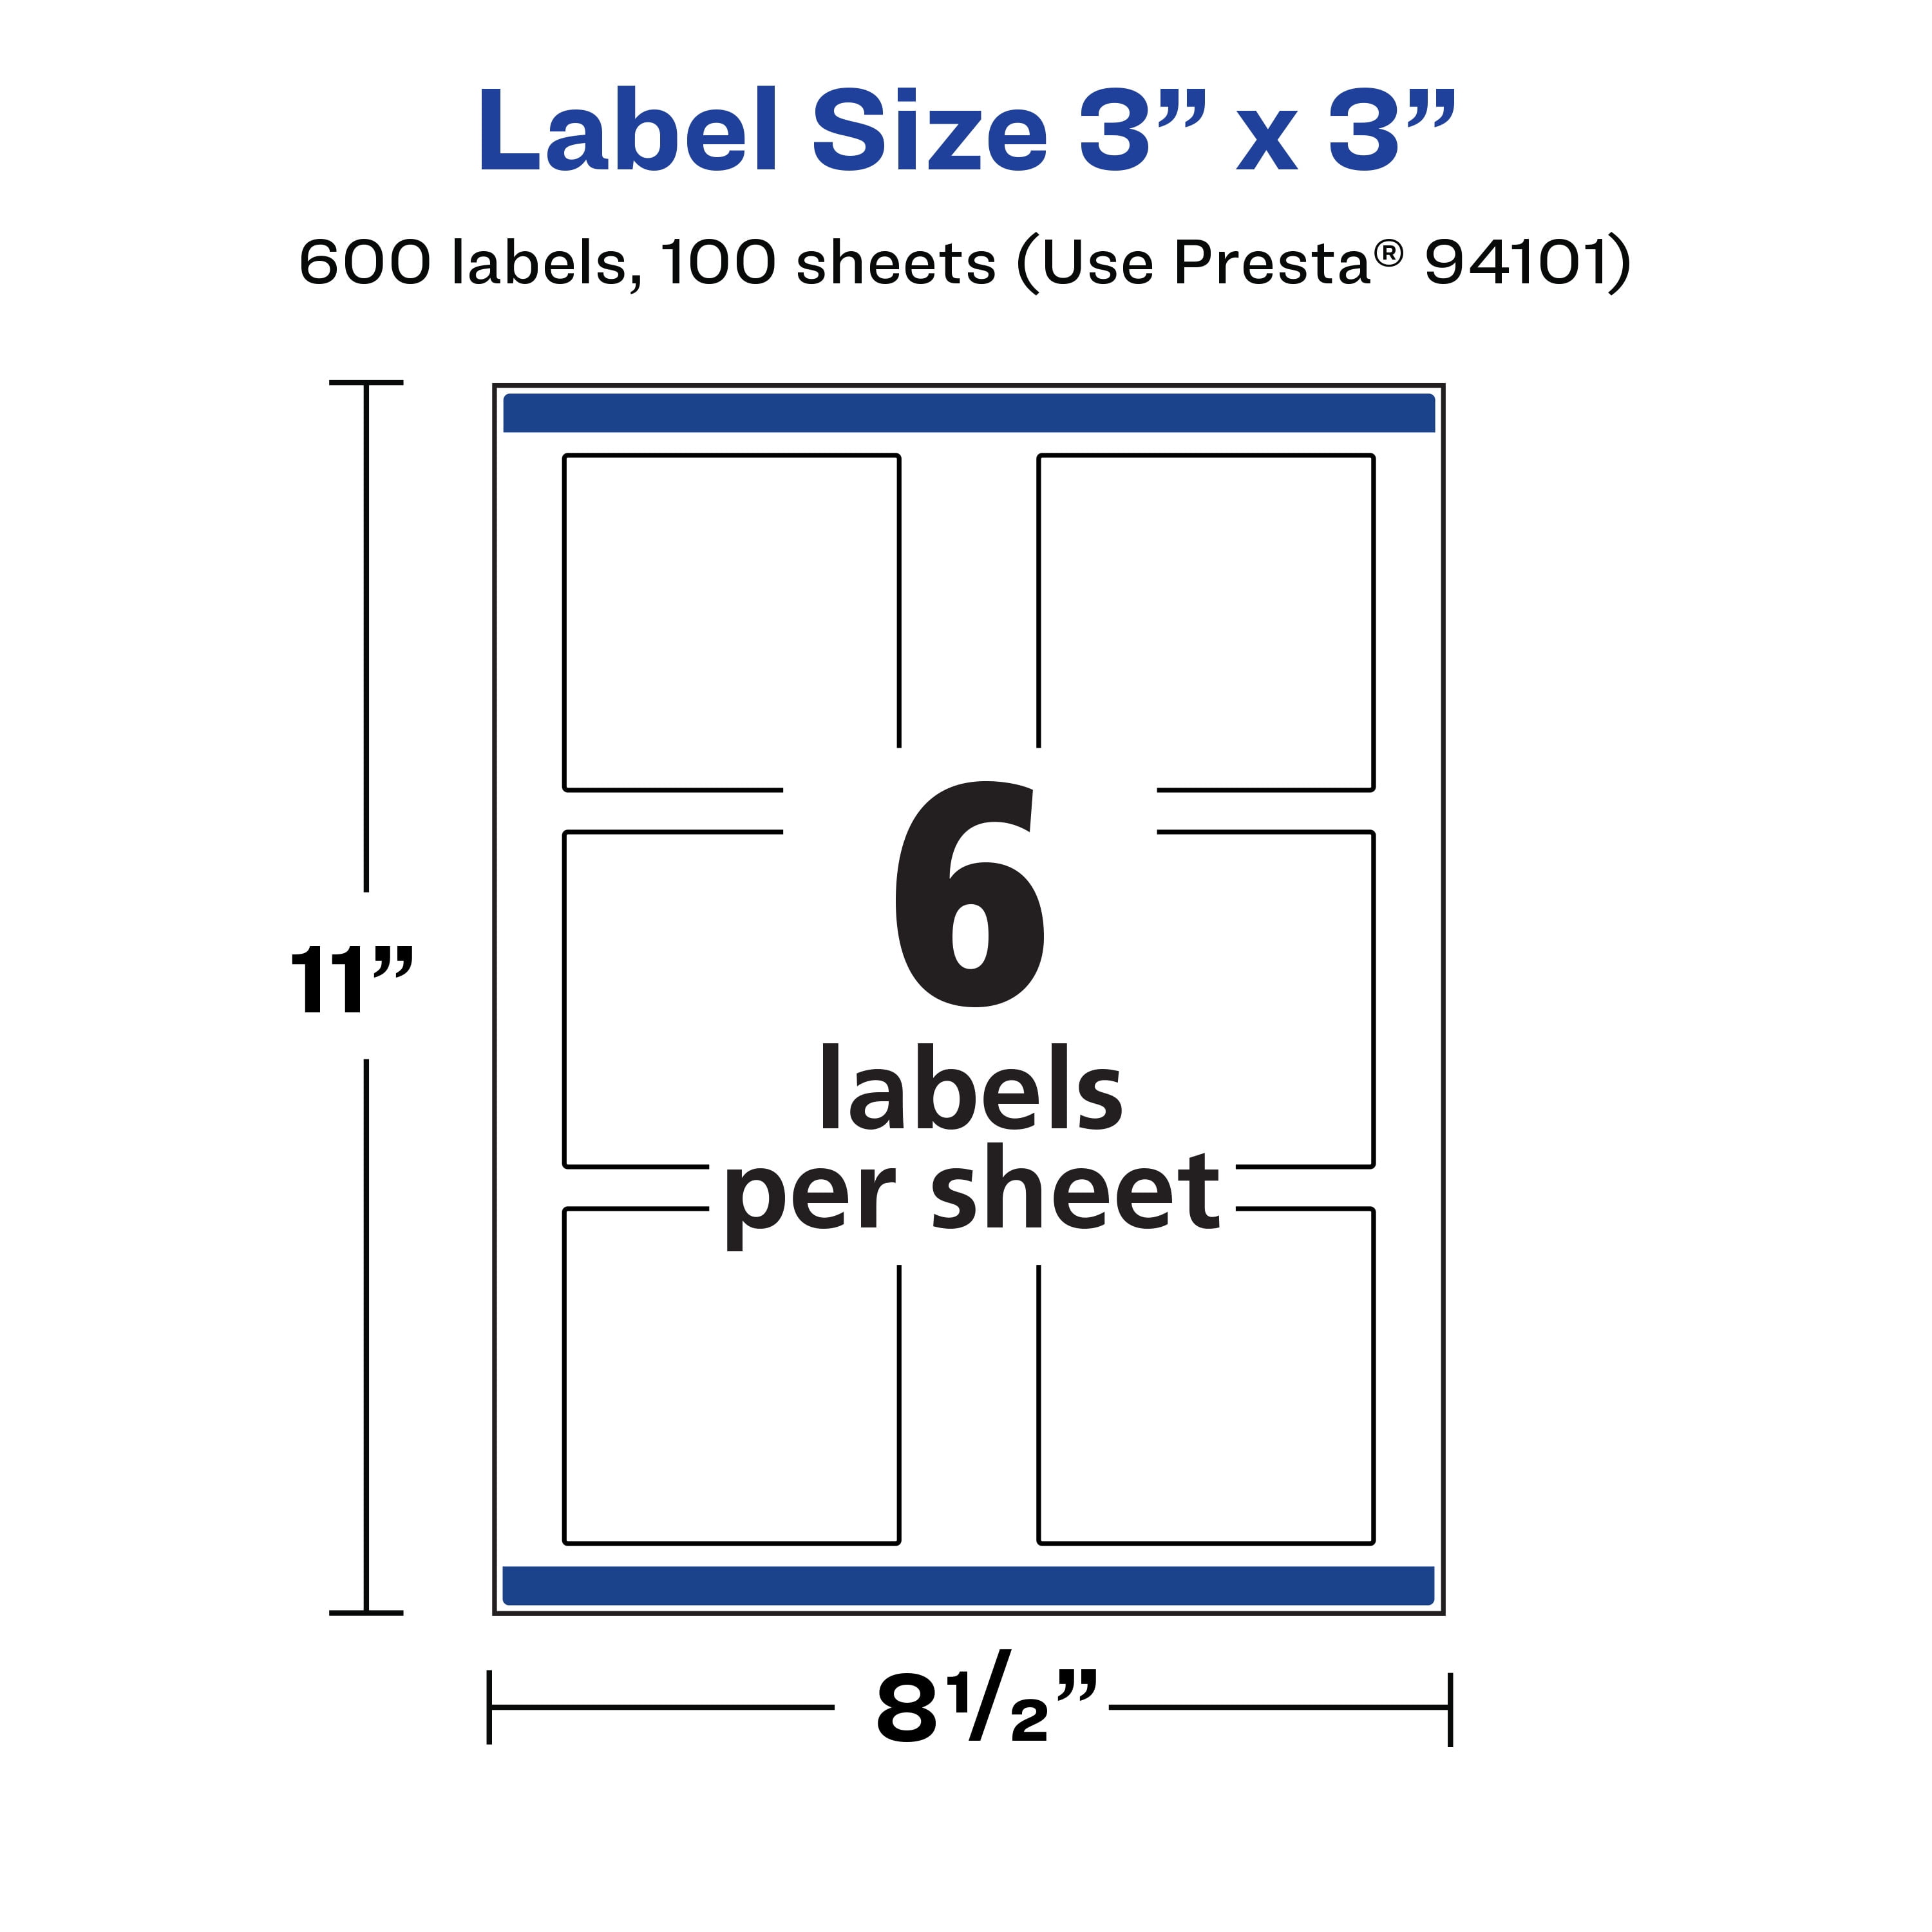 3 x 3 Self-Adhesive Square Labels - LV-10010030